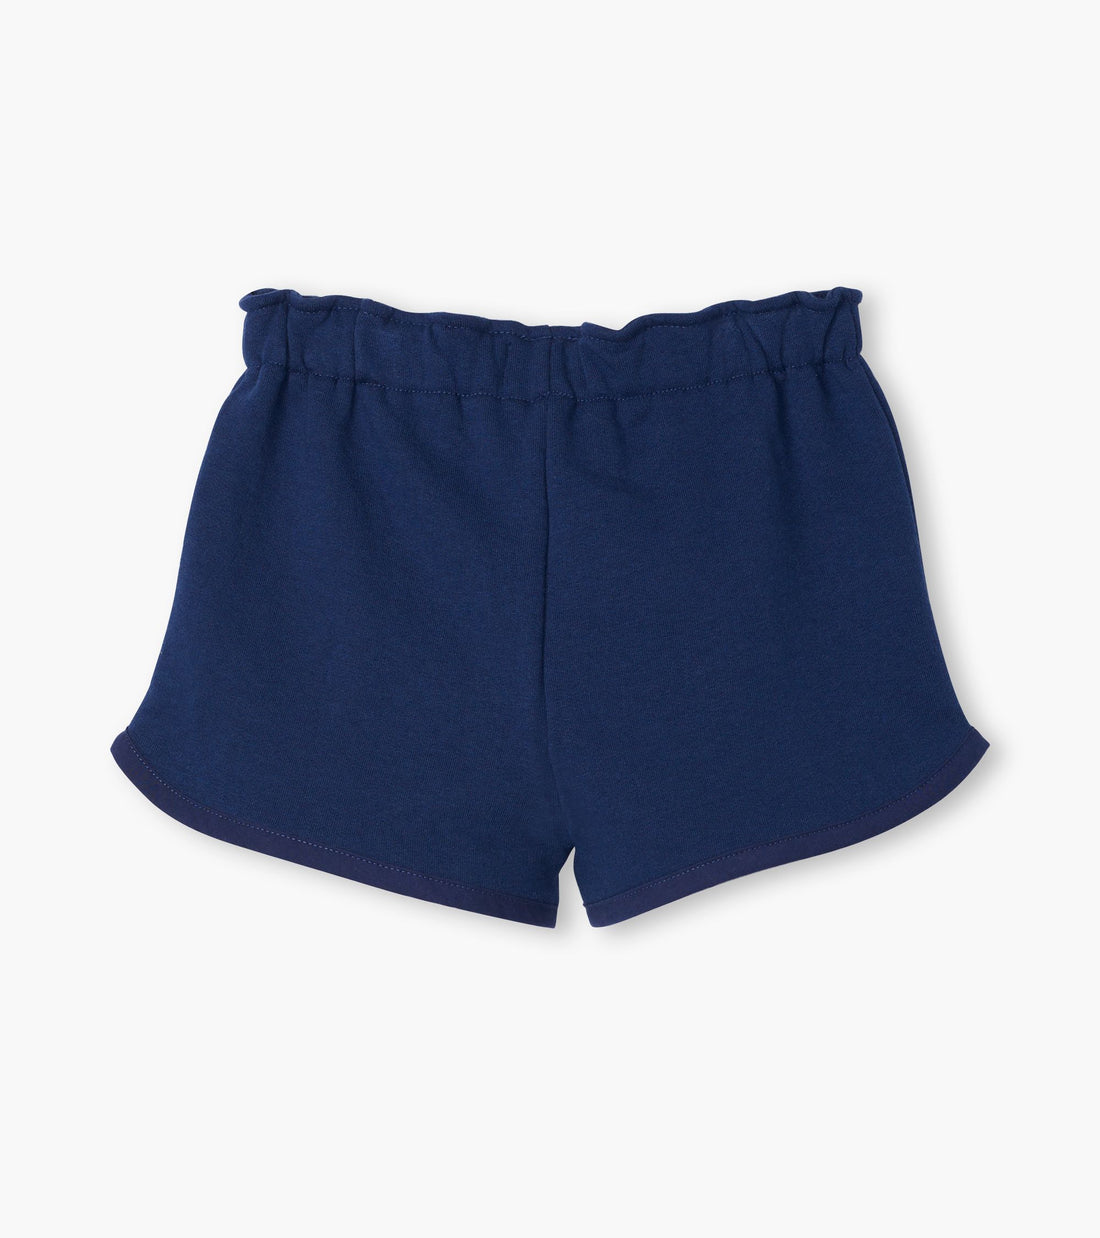 back of shorts - Hatley shorts